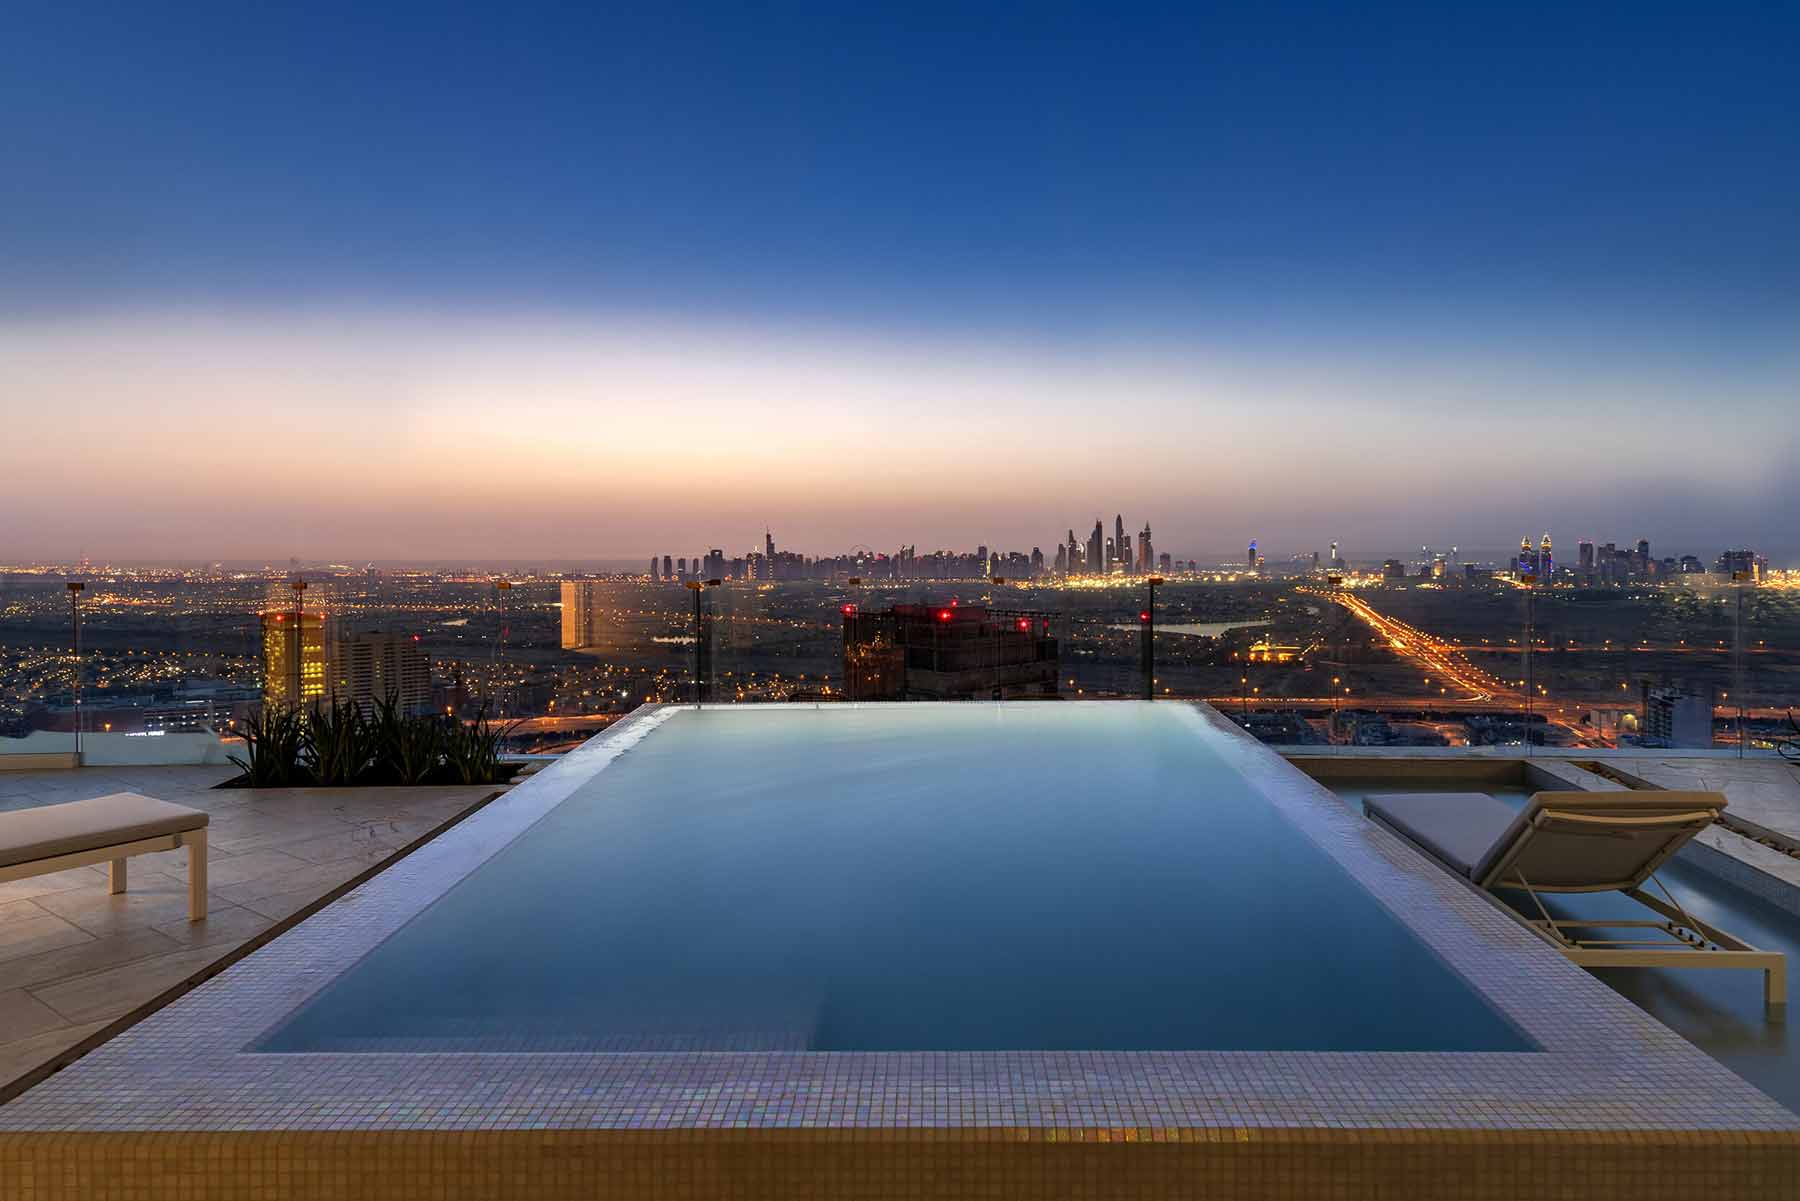 Swimming Pool in Dubai